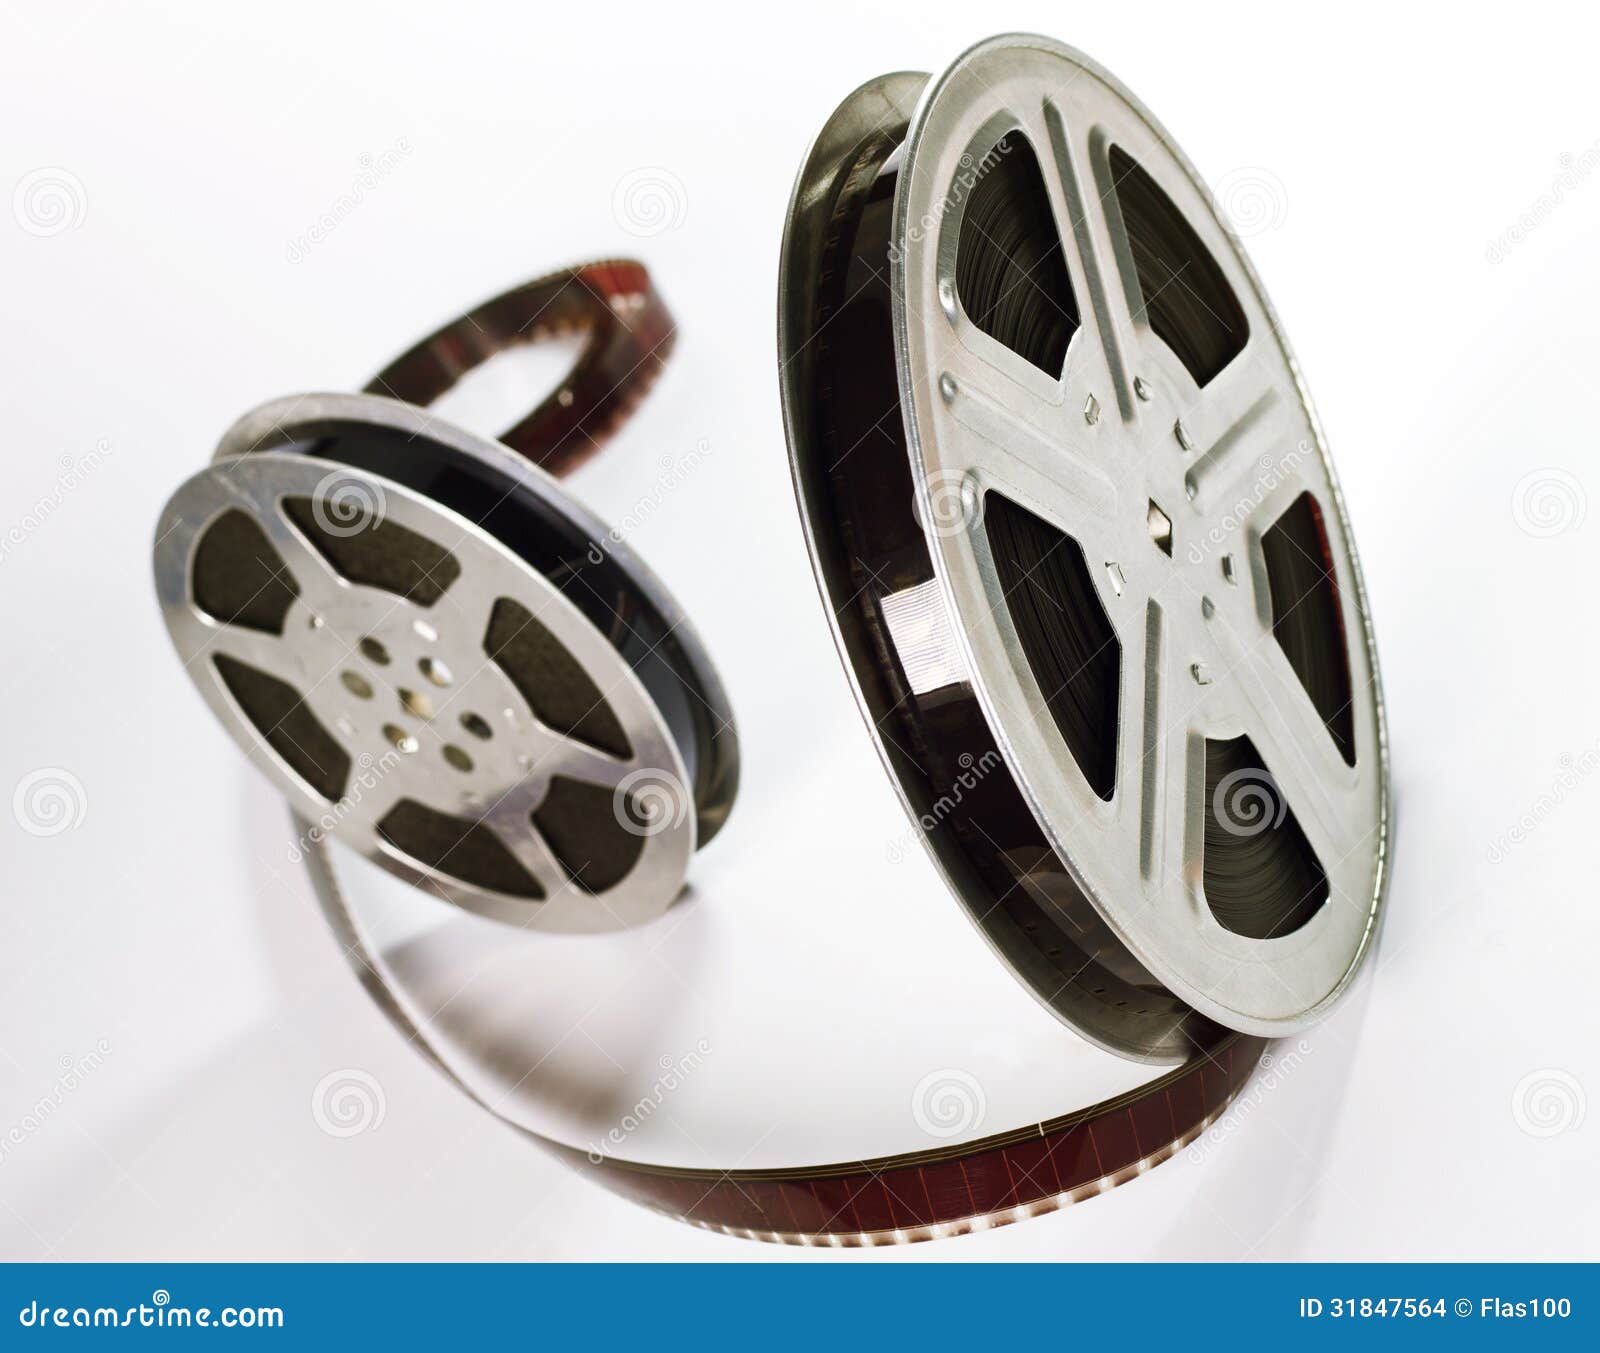 Film reel stock photo. Image of cinema, entertainment - 31847564